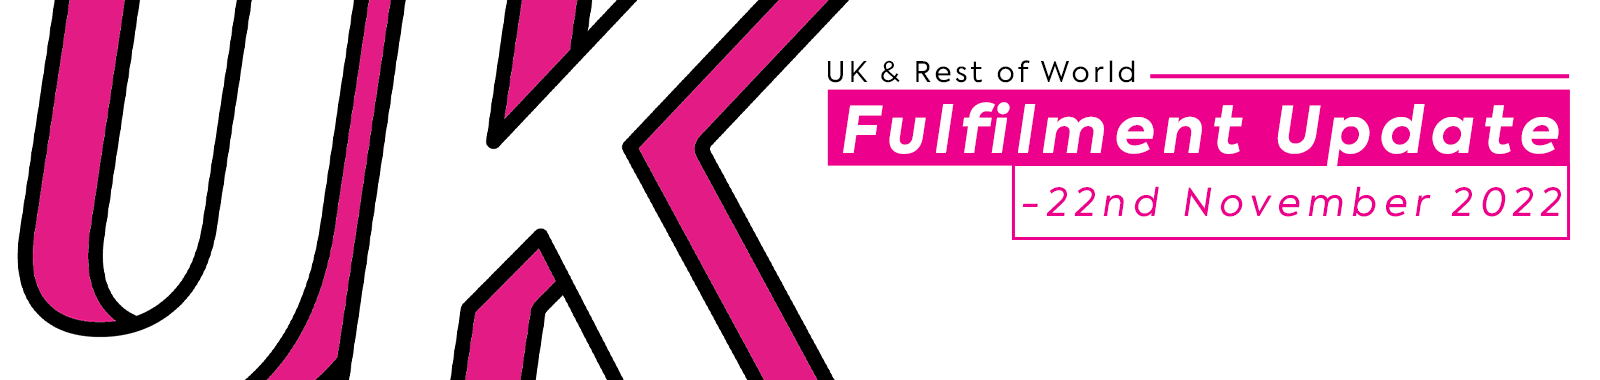 UK & ROW Fulfilment Update - 22nd November